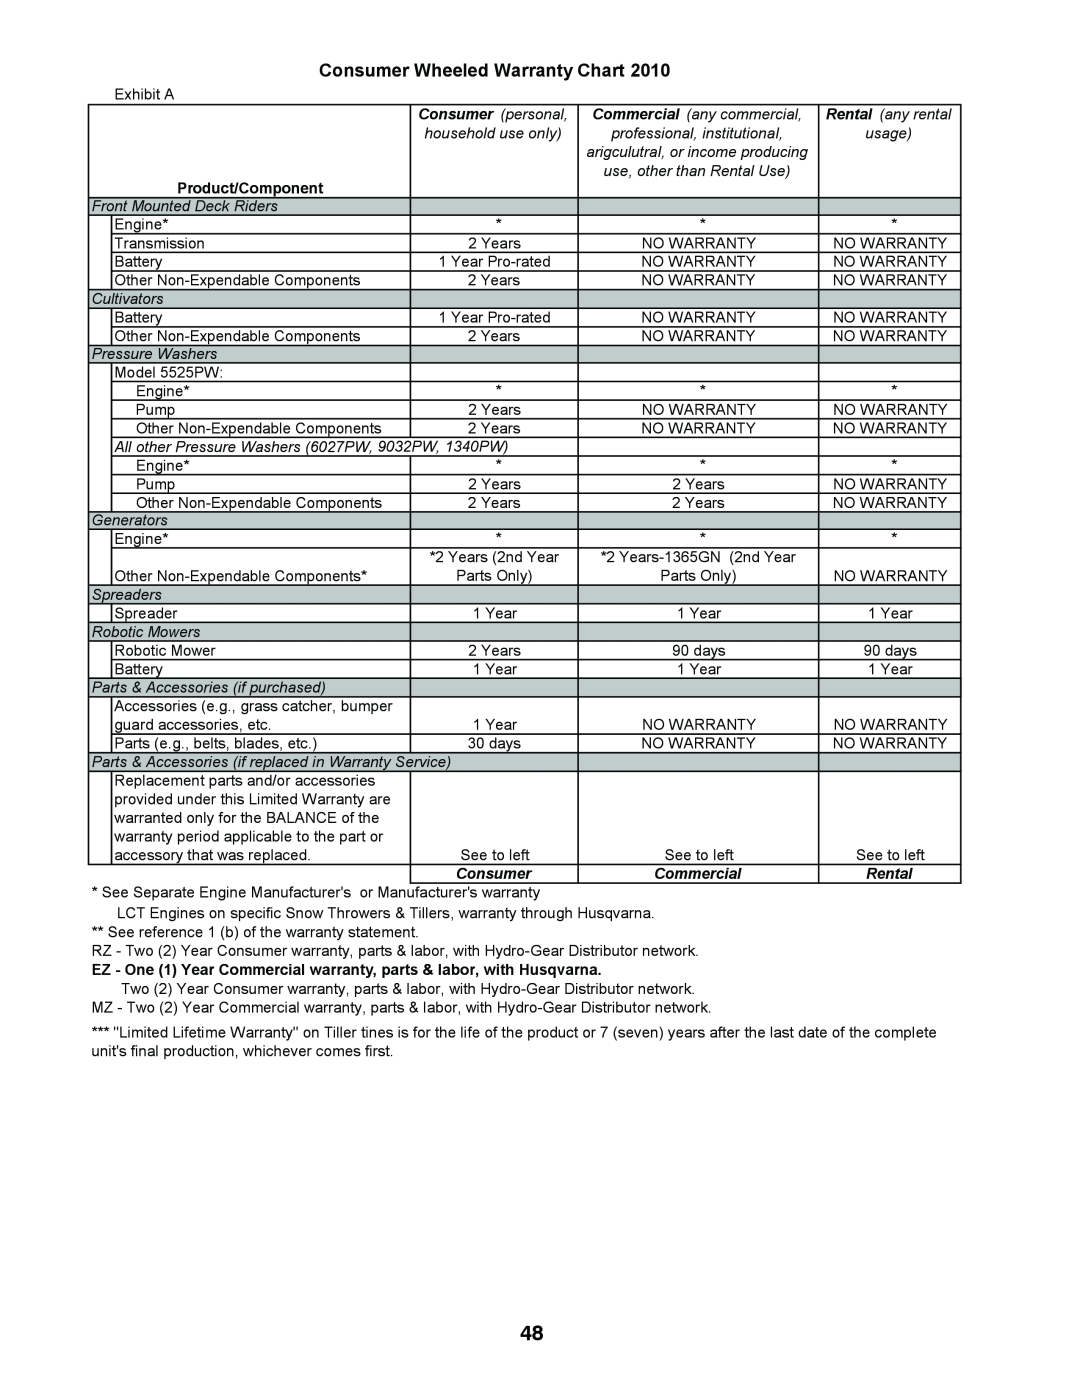 Husqvarna YTH26V54 owner manual Consumer Wheeled Warranty Chart, Product/Component 